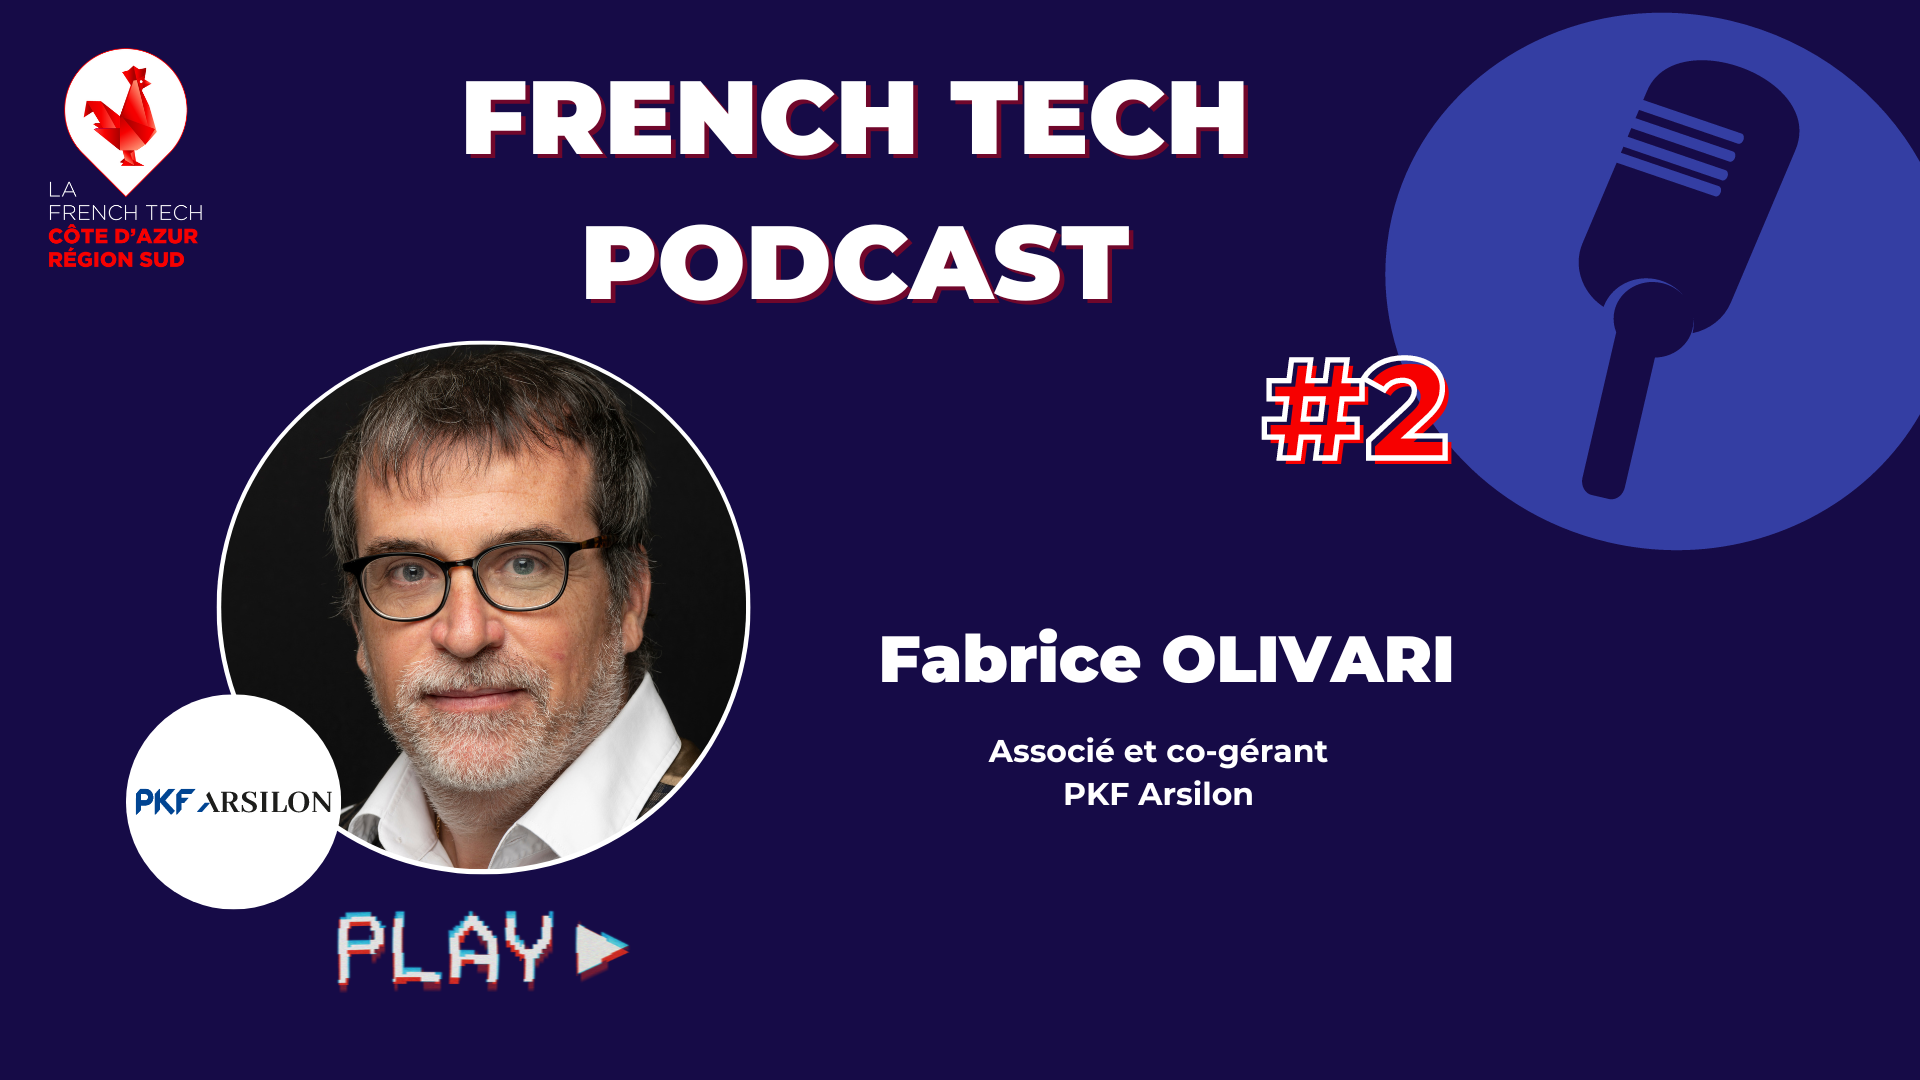 French Tech Podcast #2 Fabrice Olivari de PKF Arsilon